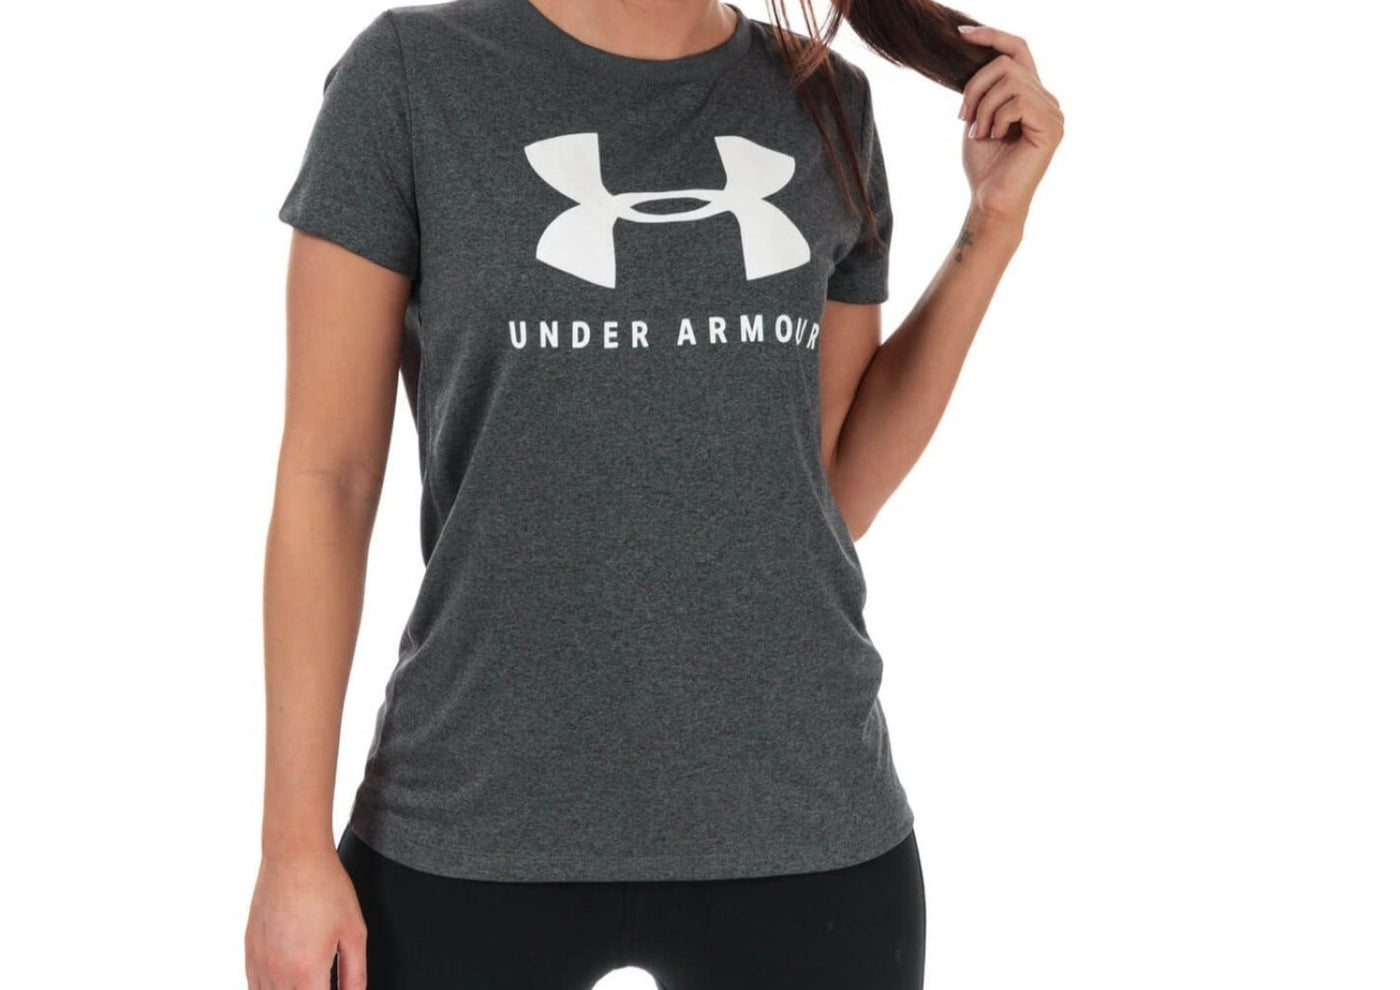 Under Armour women's shirt in grey